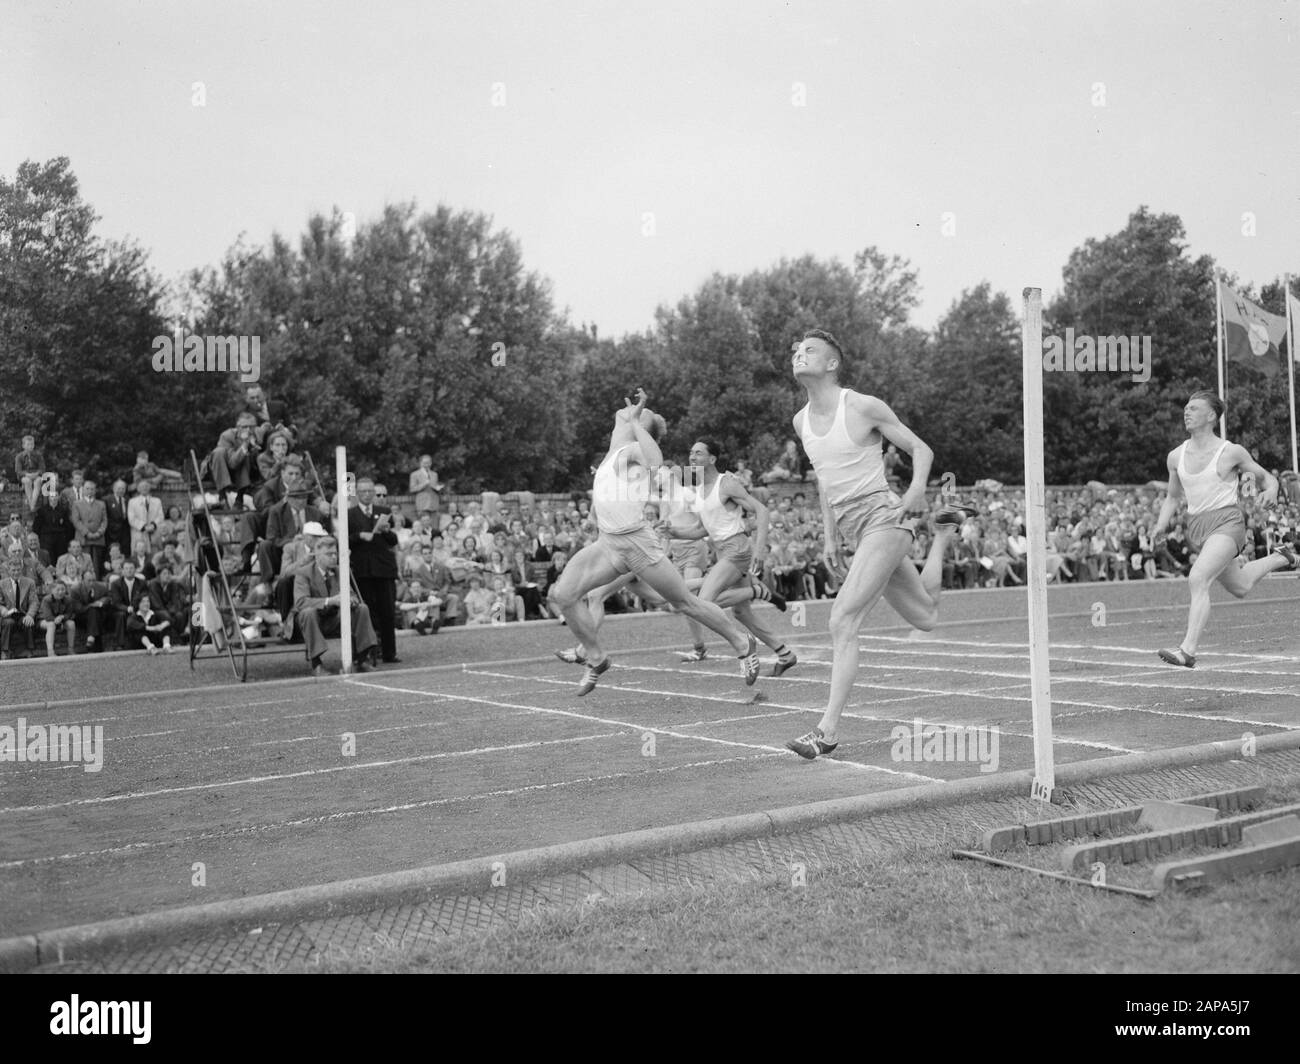 Atletiek Den Haag R.V.nederland, final 100 m mens Date: 10 July 1954 Location: The Hague, Zuid-Holland Keywords: ATTLETICS, finals Stock Photo